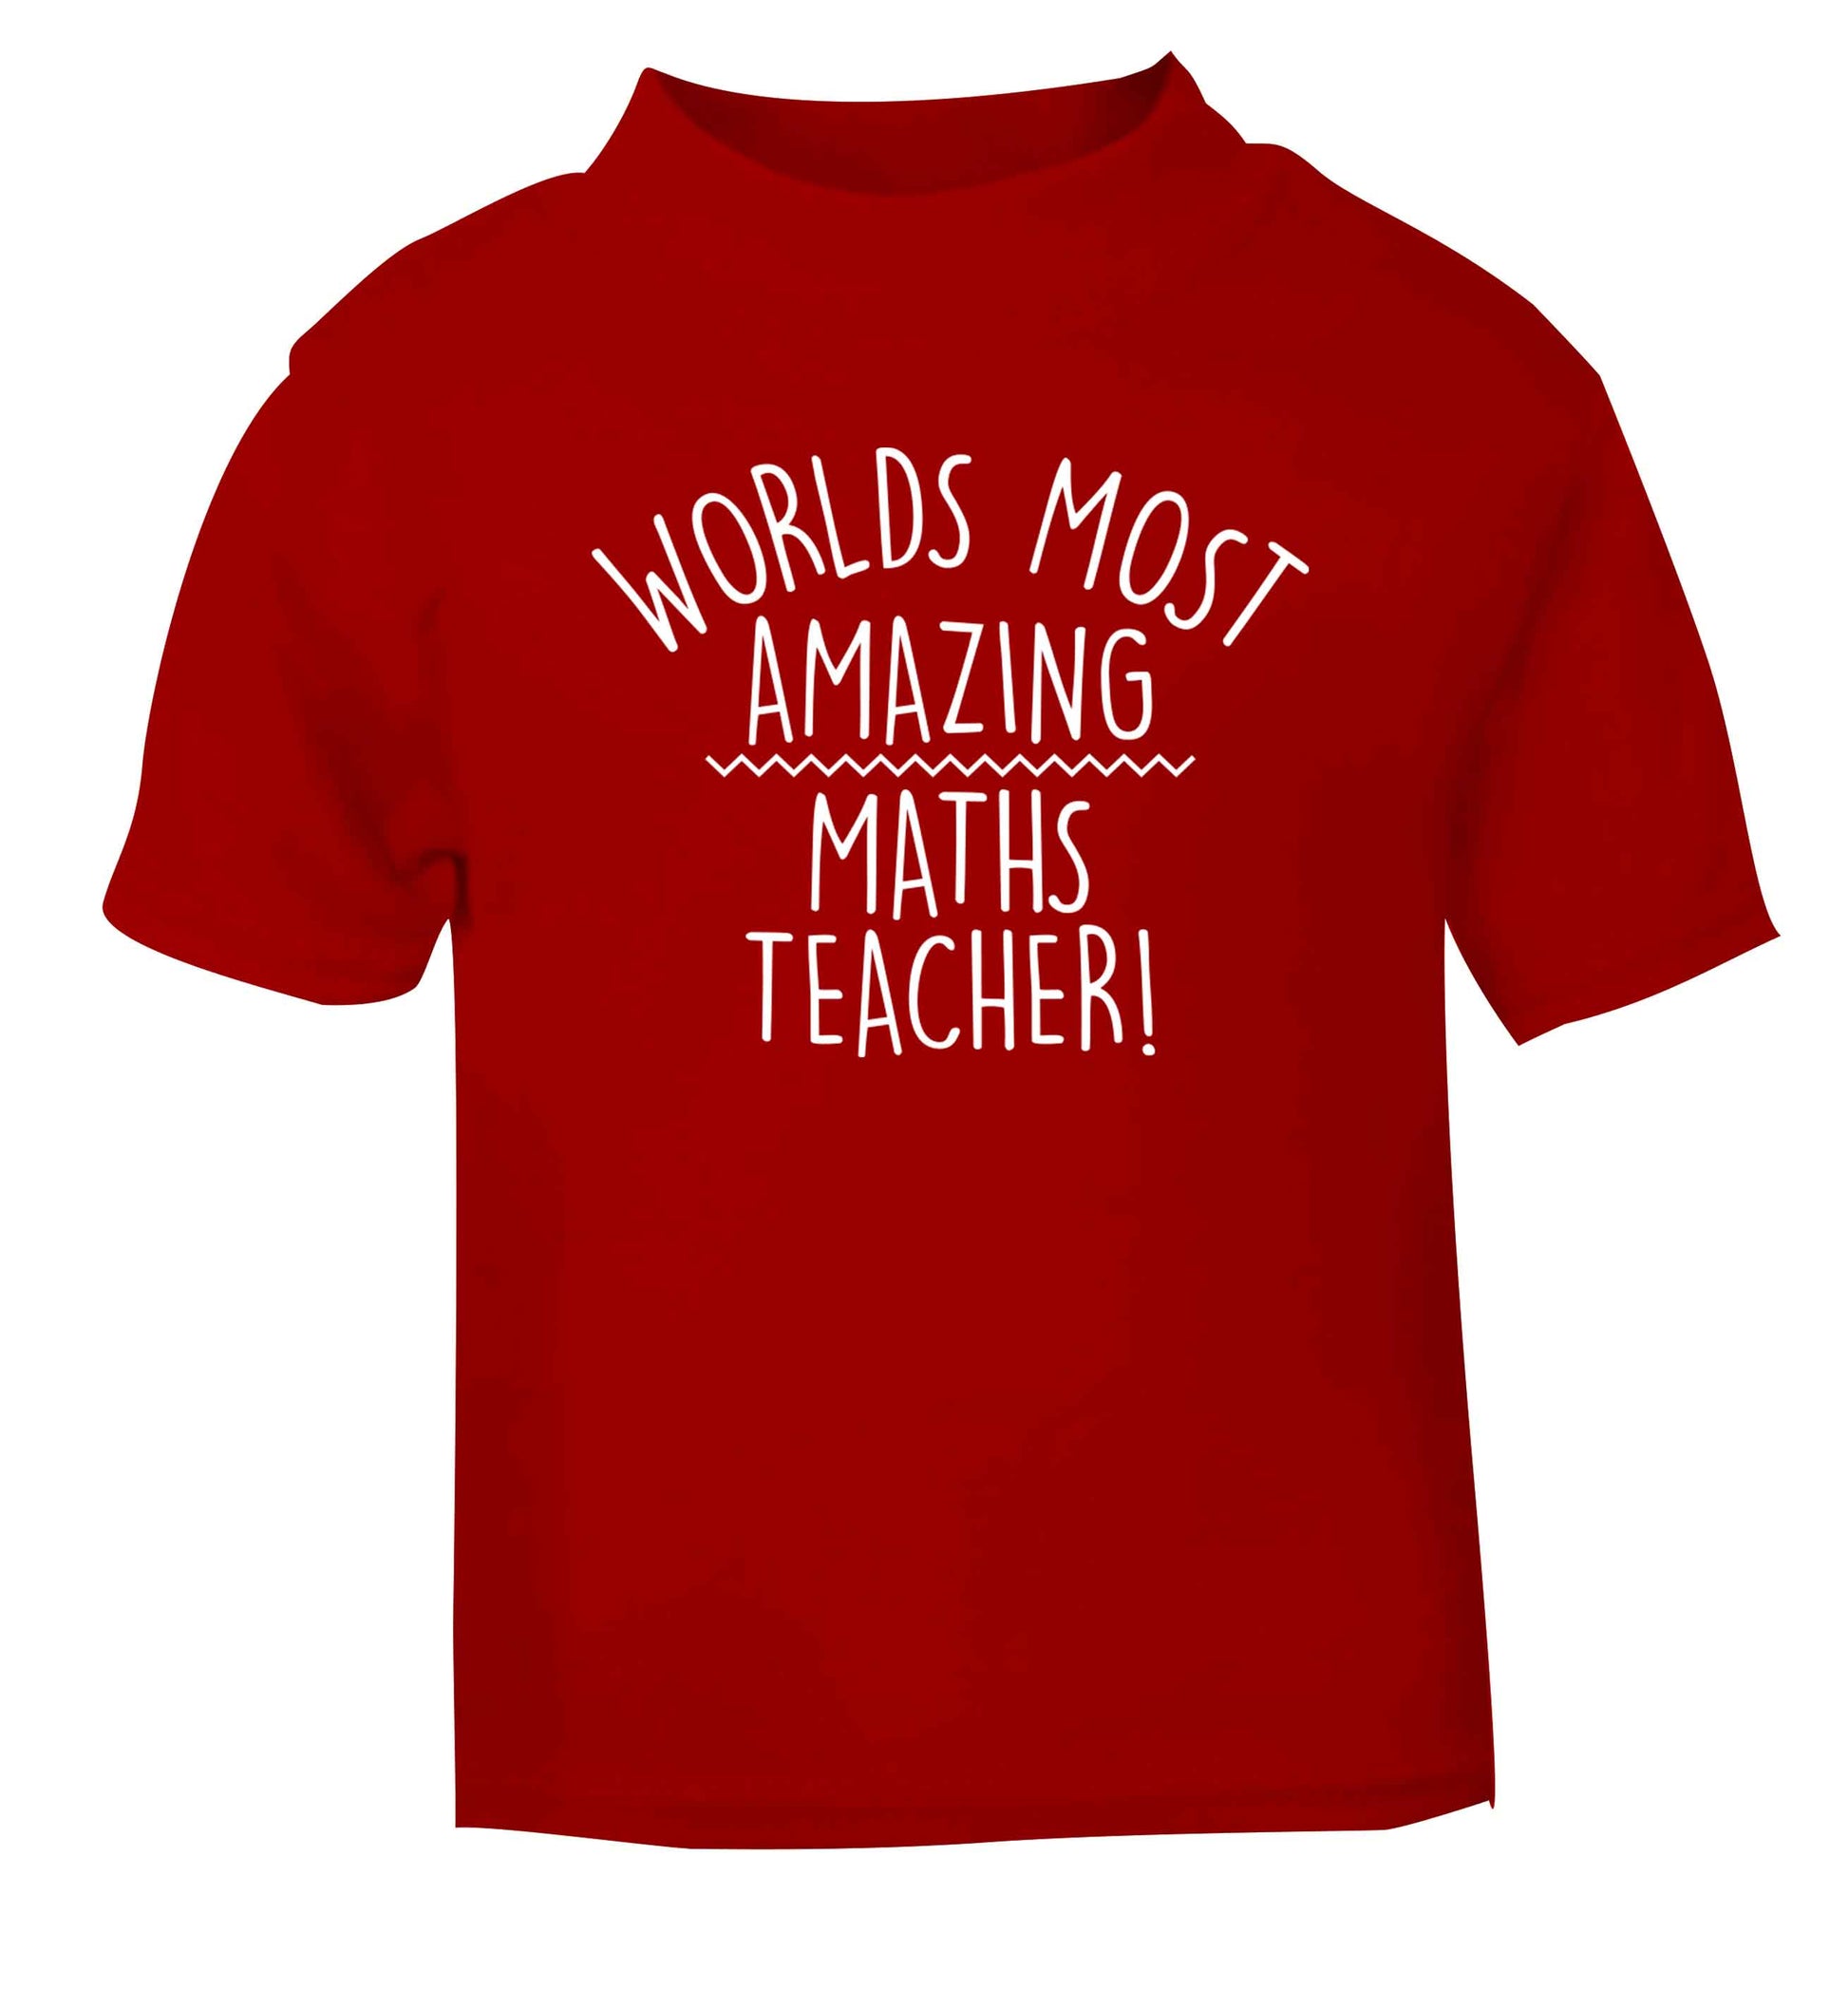 Worlds most amazing maths teacher red baby toddler Tshirt 2 Years